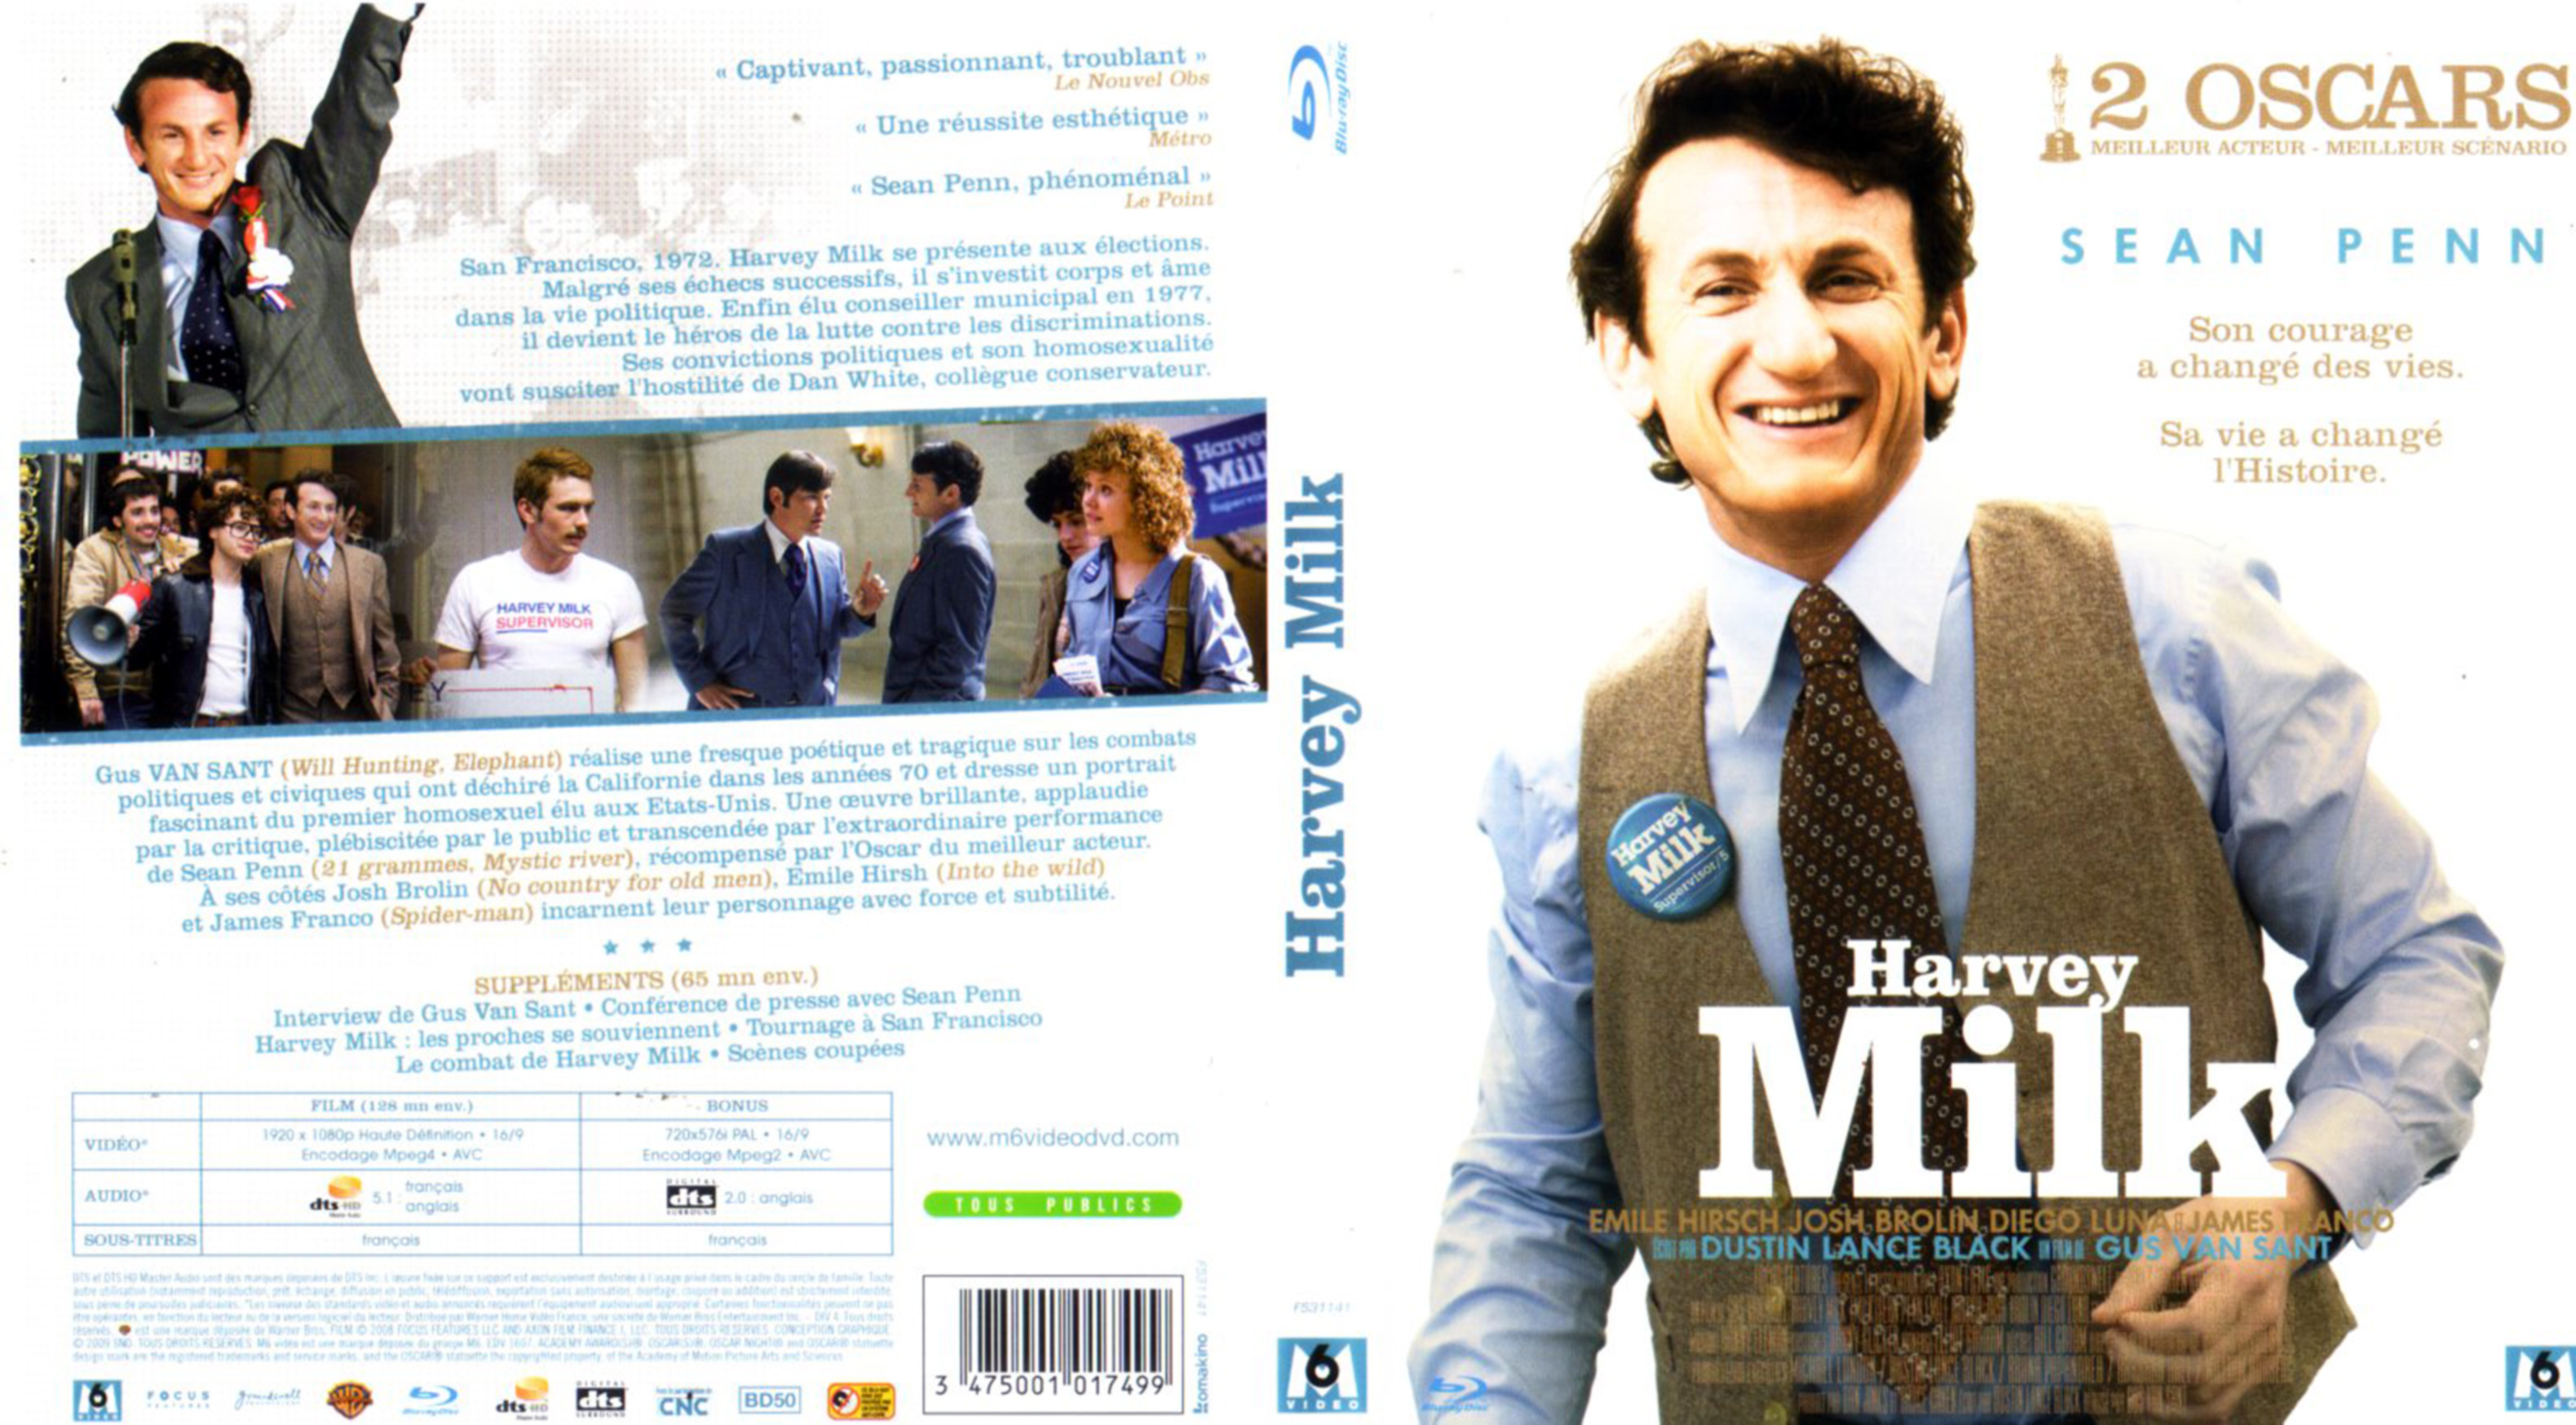 Jaquette DVD Harvey Milk (BLU-RAY)